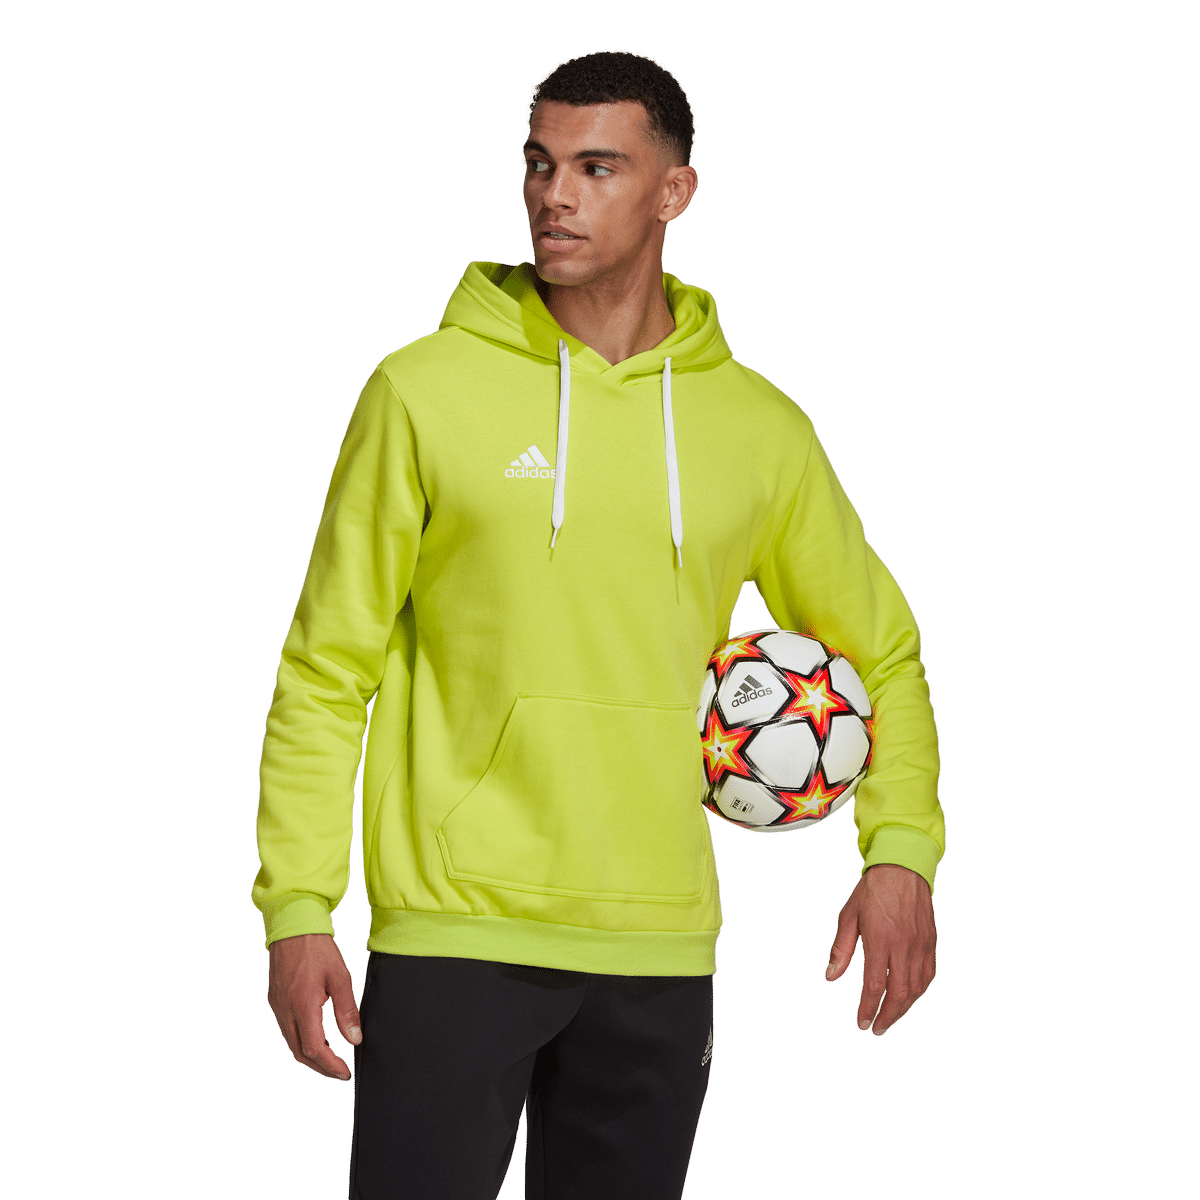 Nike Premium Fitness gants d'entrainement et musculation homme - Soccer  Sport Fitness